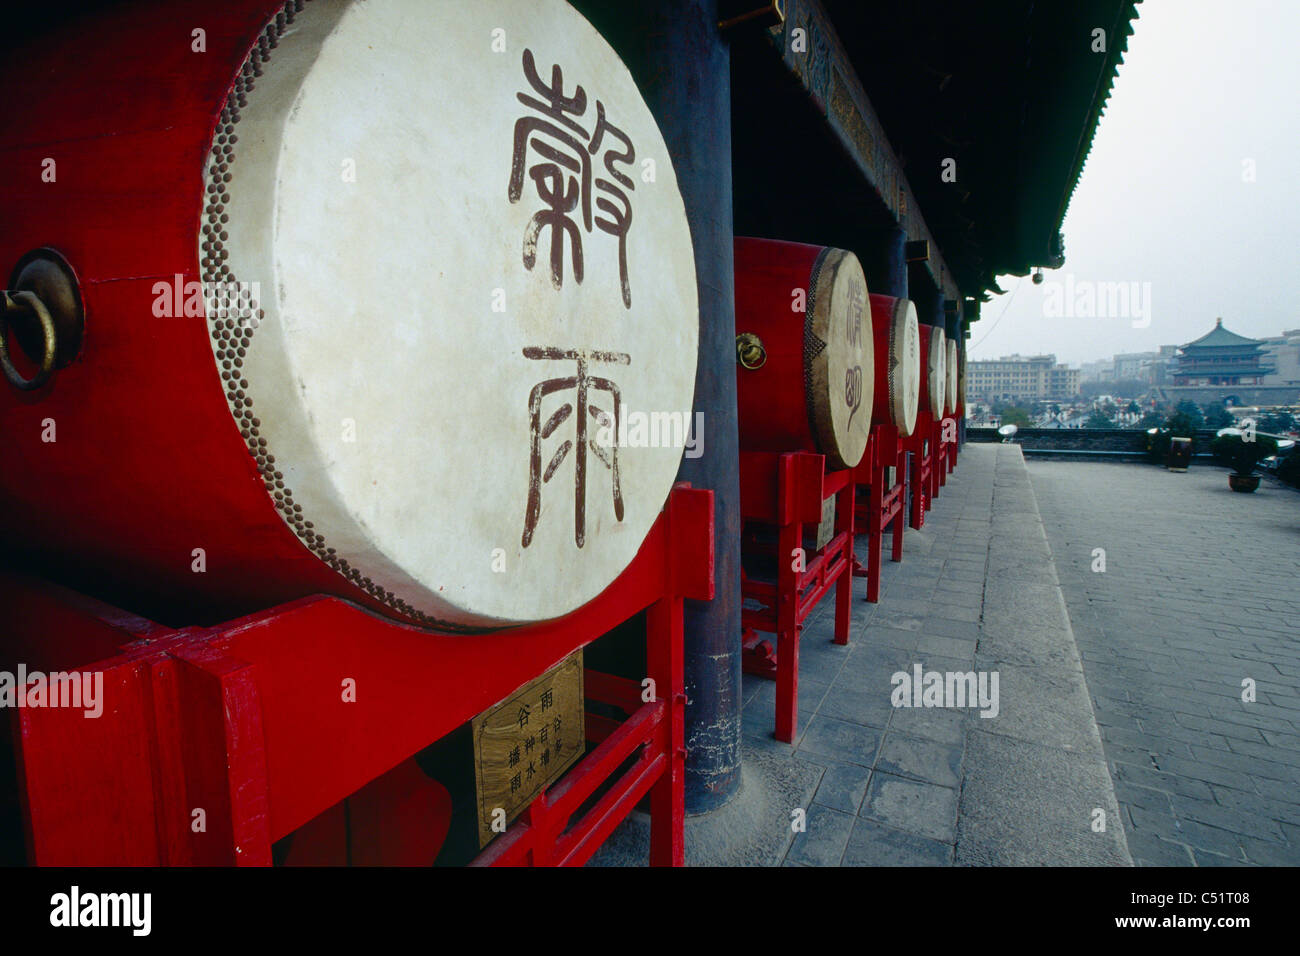 Fila di cinesi tamburi cerimoniali sul display, la Torre del Tamburo, Citta' di Xian, Shaanxi, Cina Foto Stock